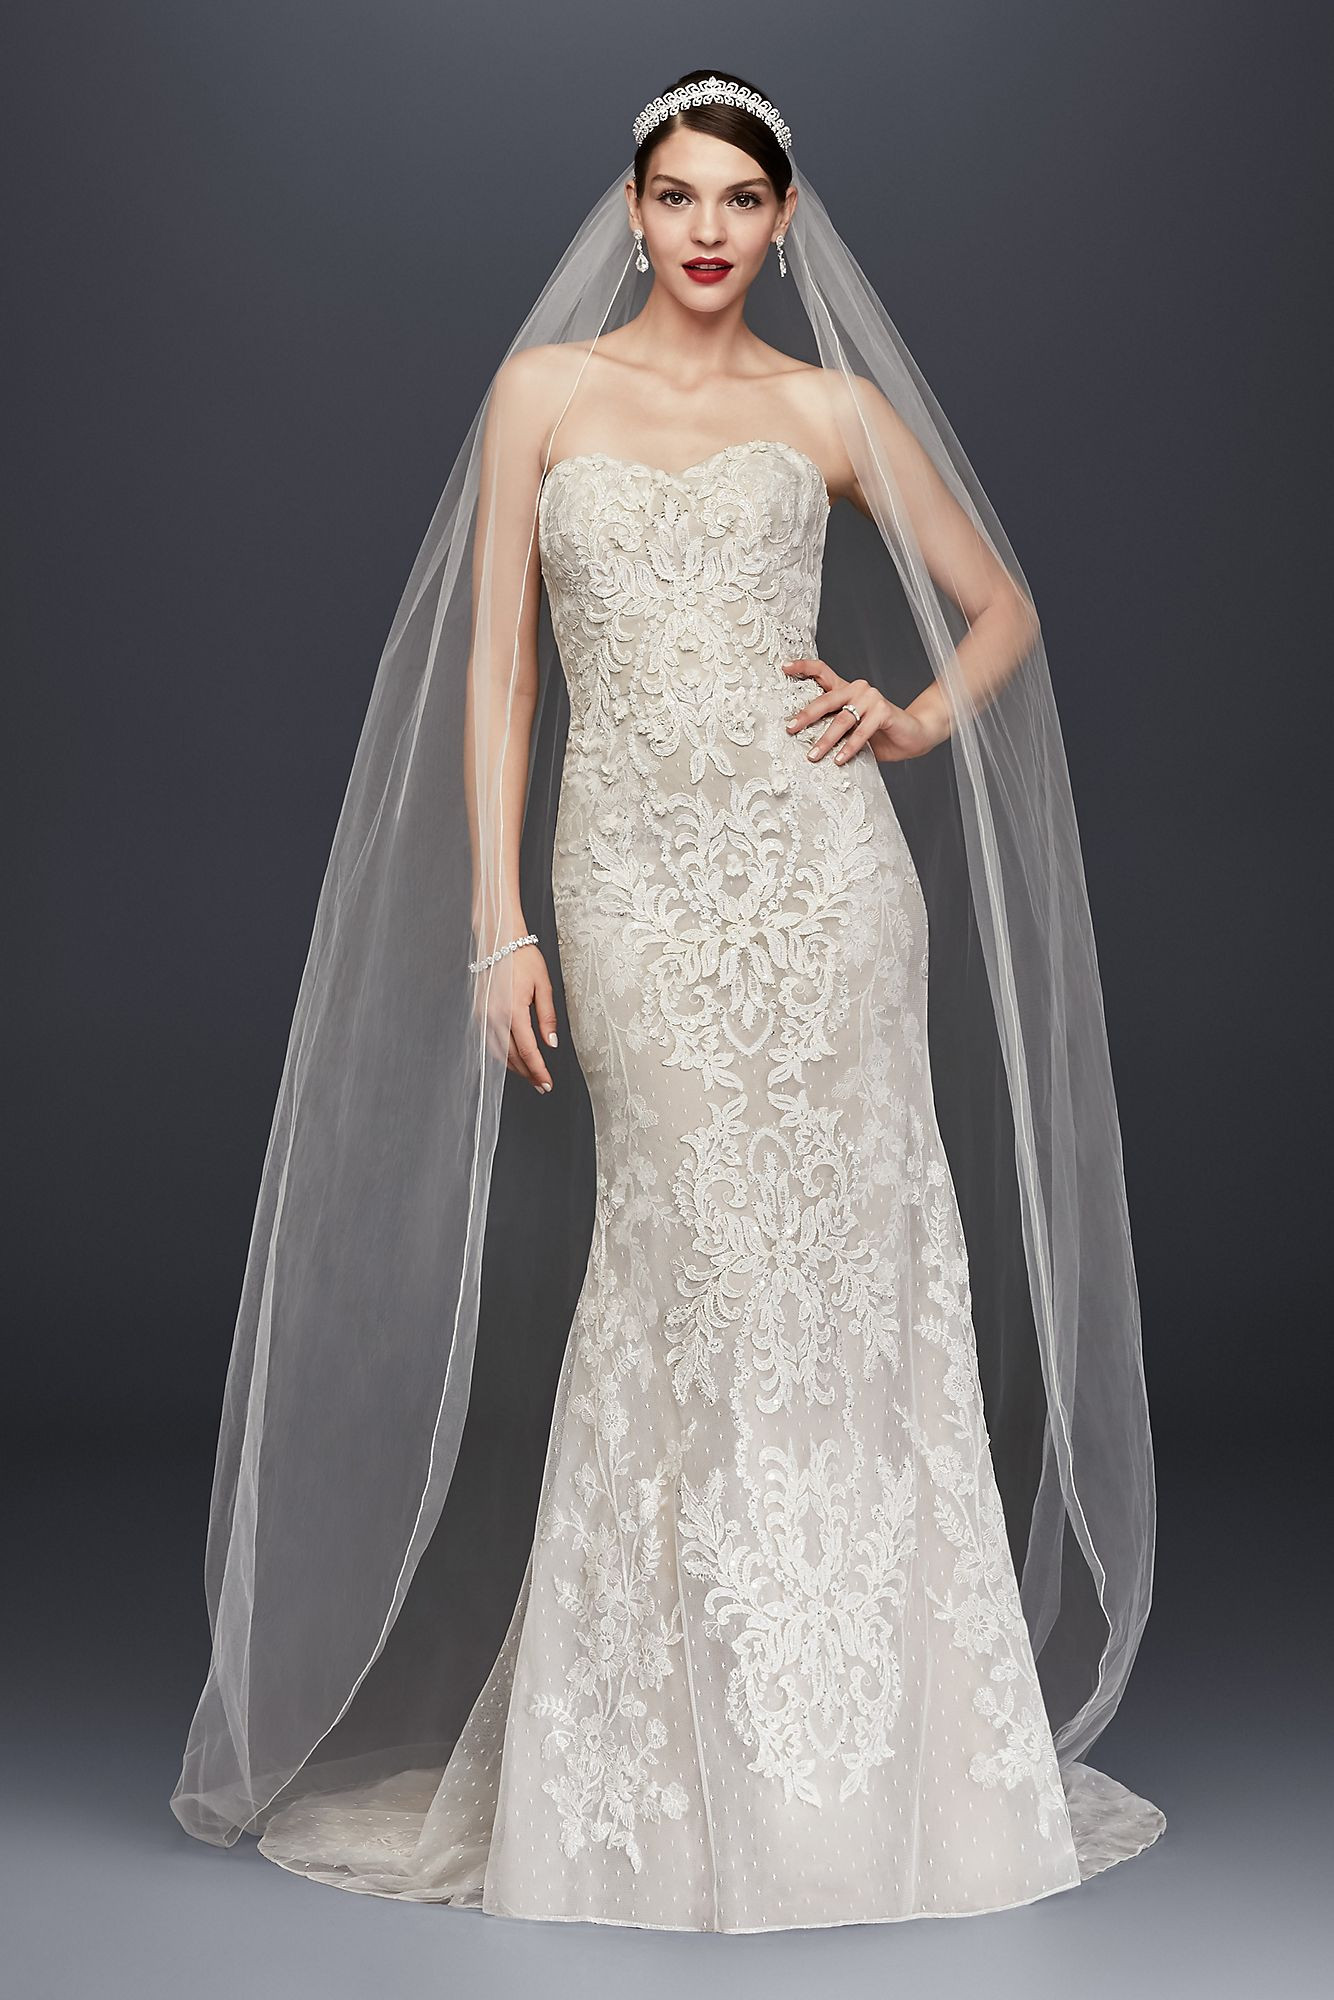 Sheath Wedding Gowns
 Strapless Sheath Wedding Dress with Lace Applique